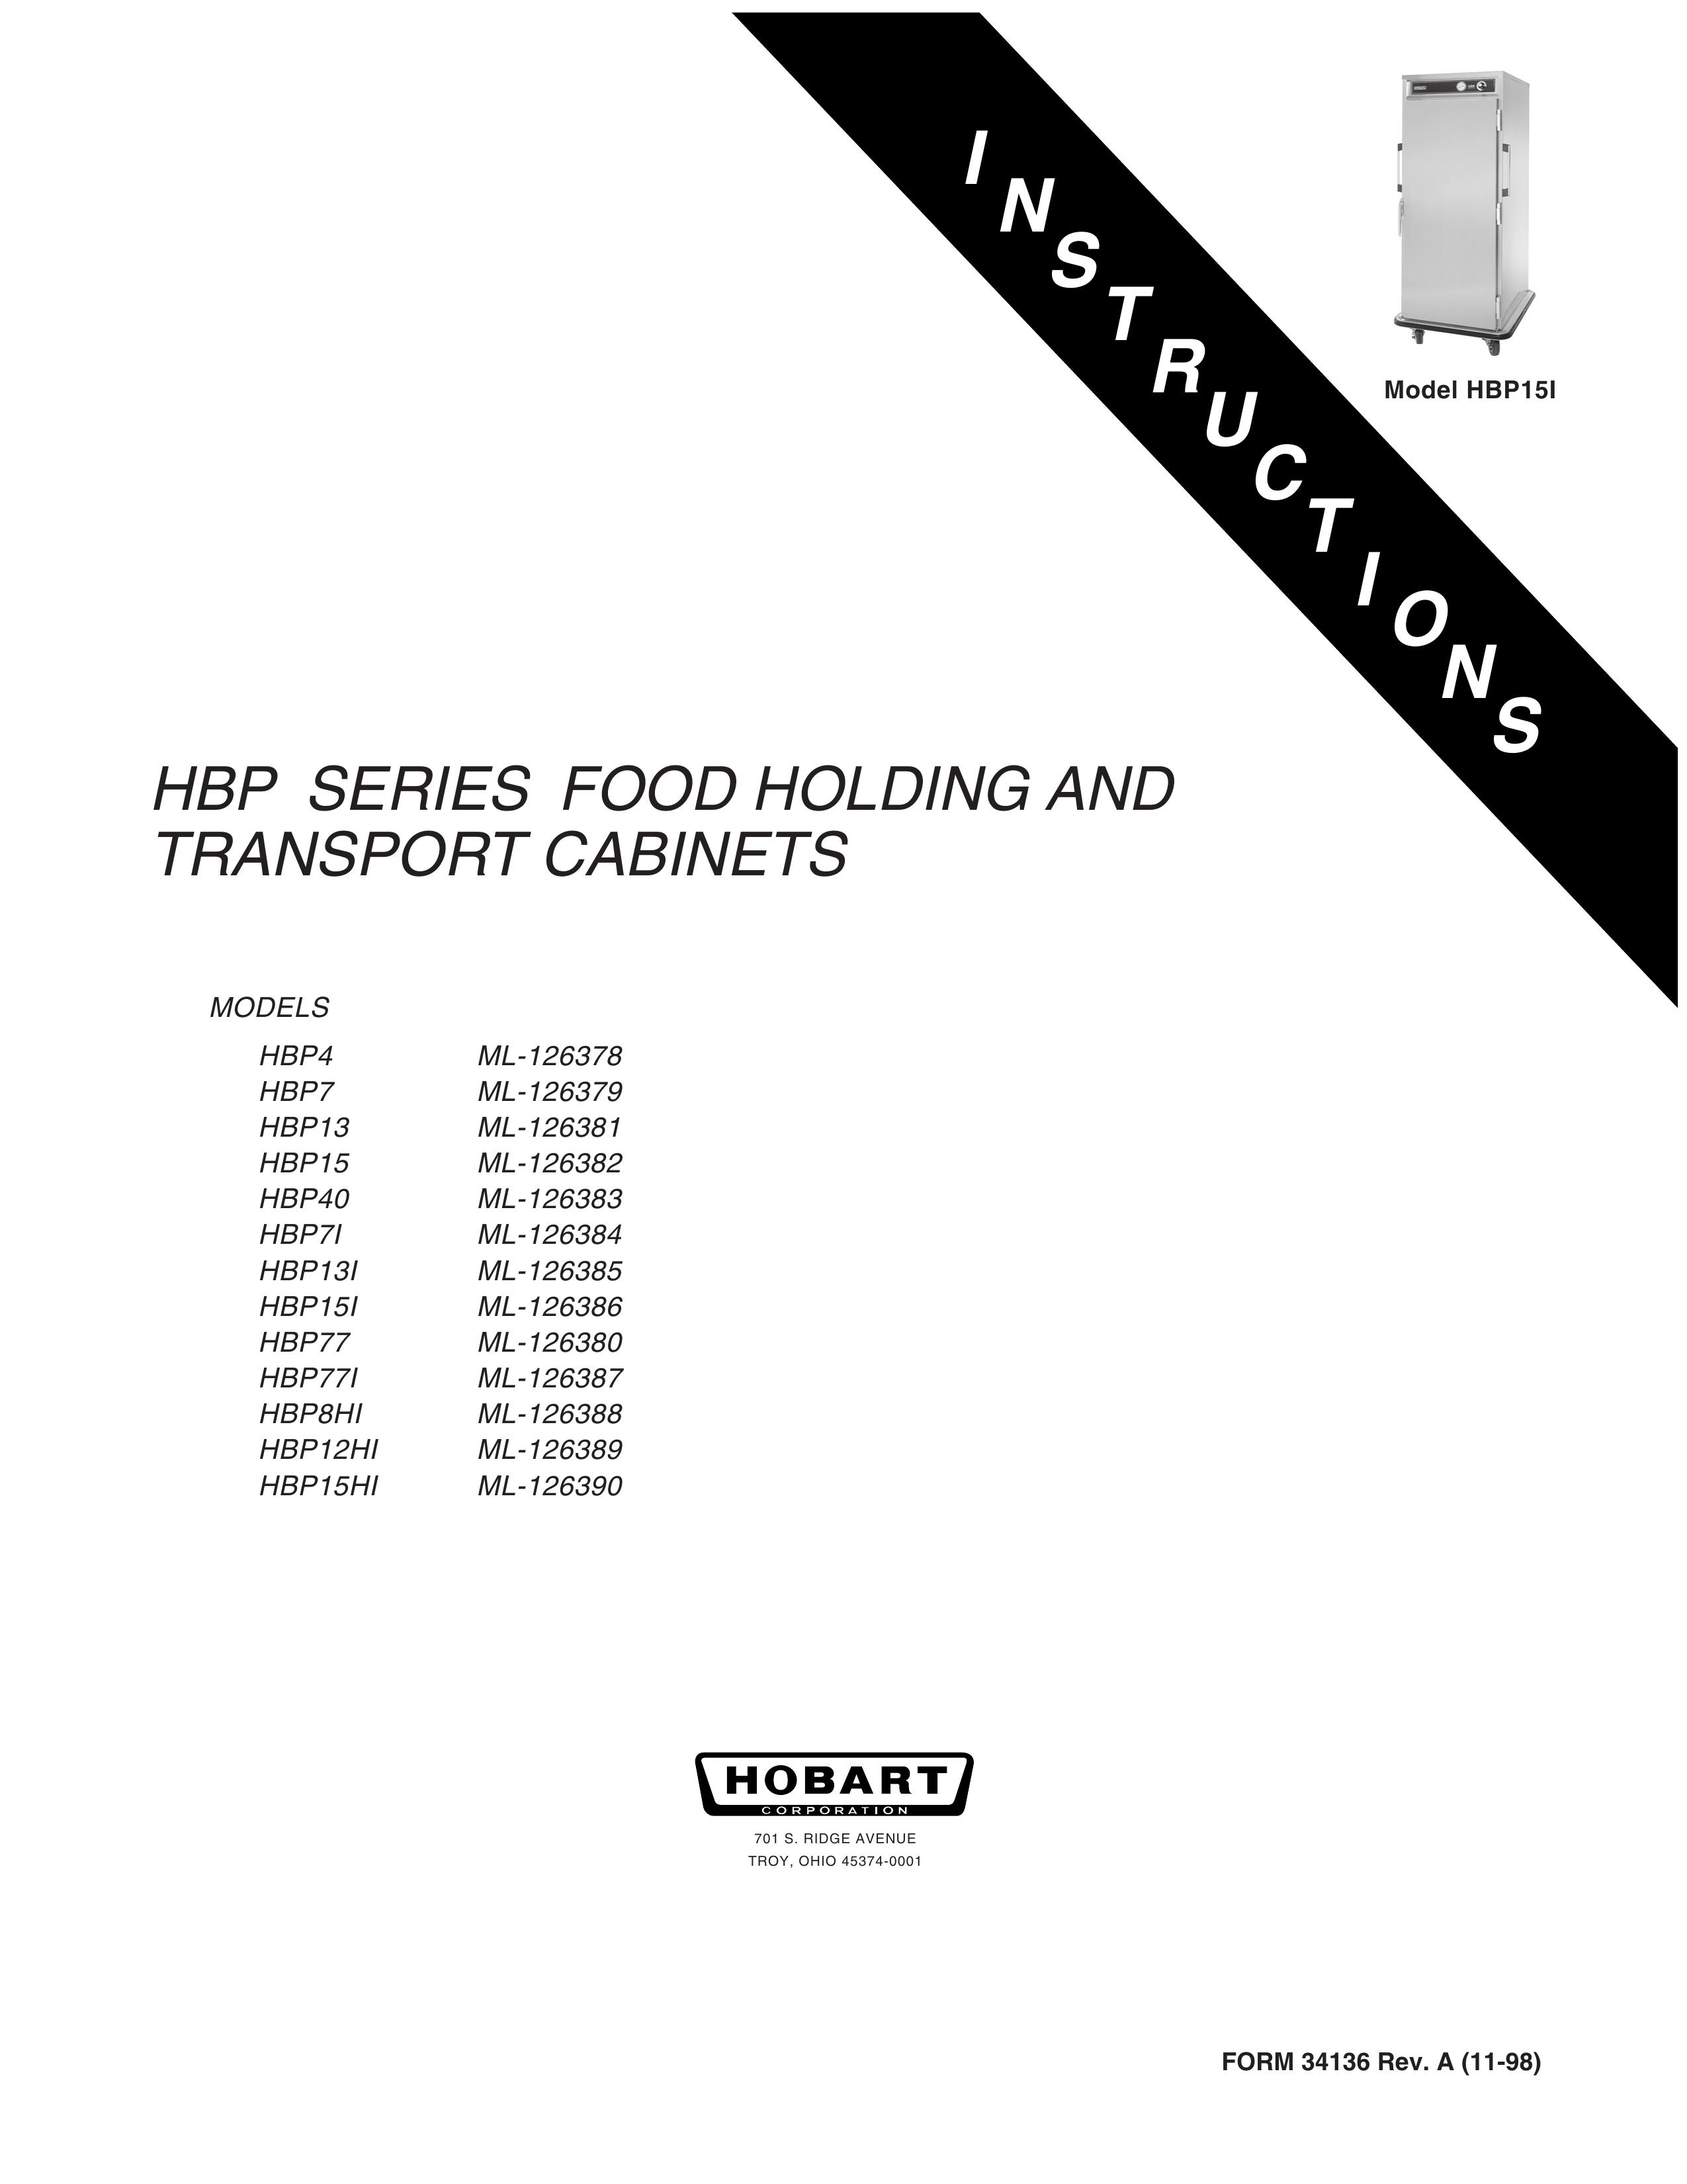 Hobart HBP15 ML-126382 Outdoor Storage User Manual